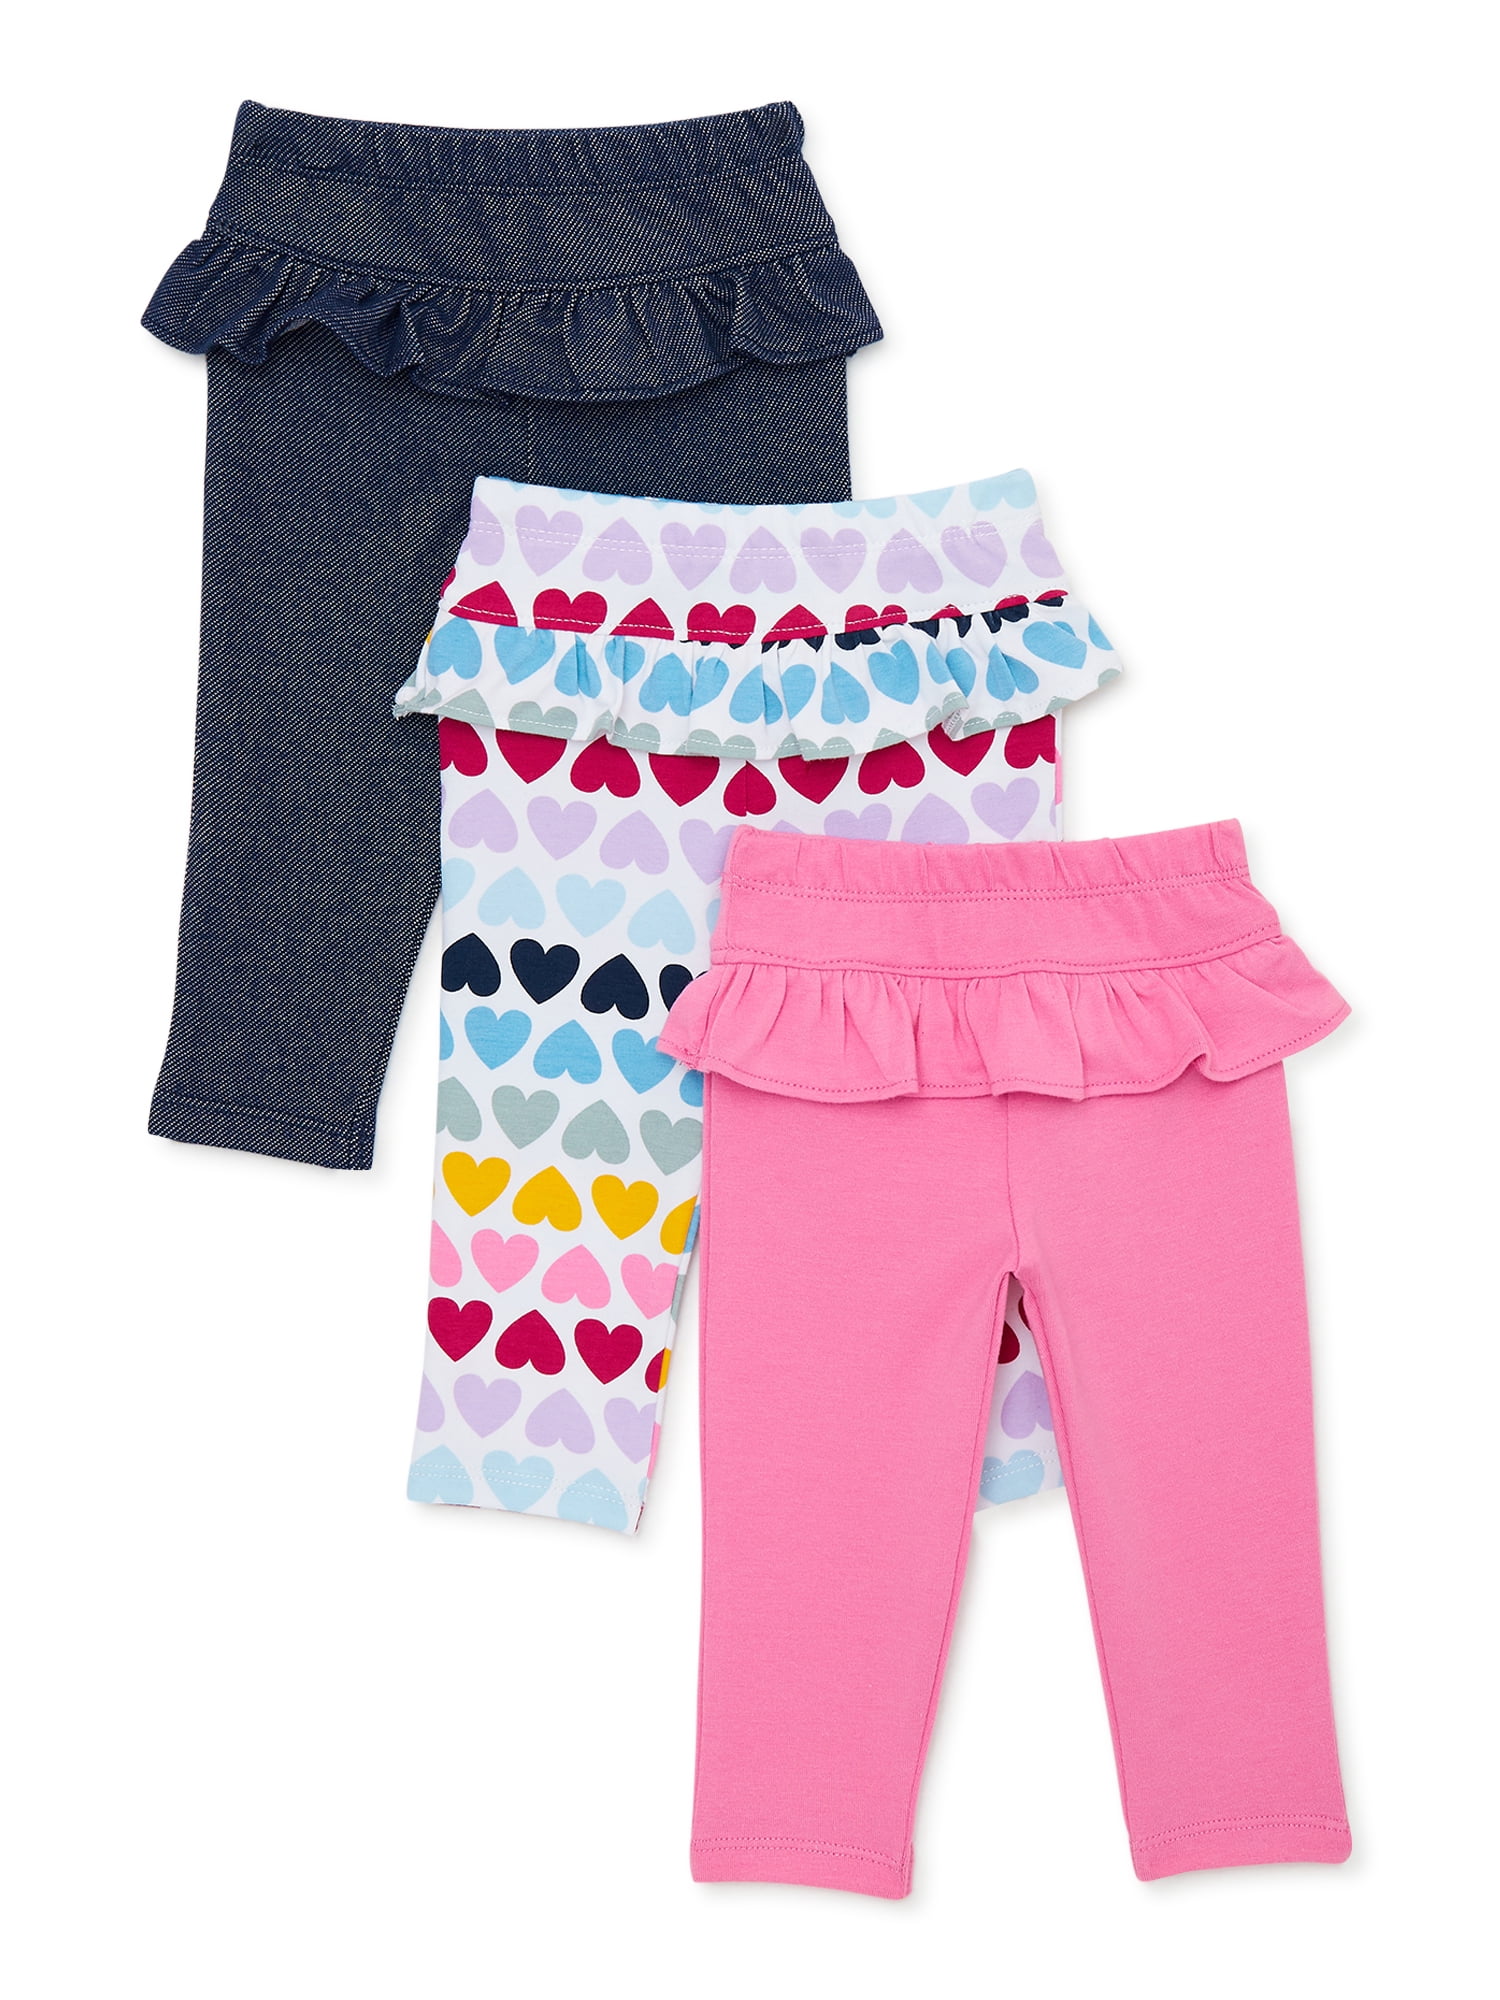 Baby Girls Infant Toddler 2 Pack Soft Leggings Jeggings Trouser Pants With Frill 